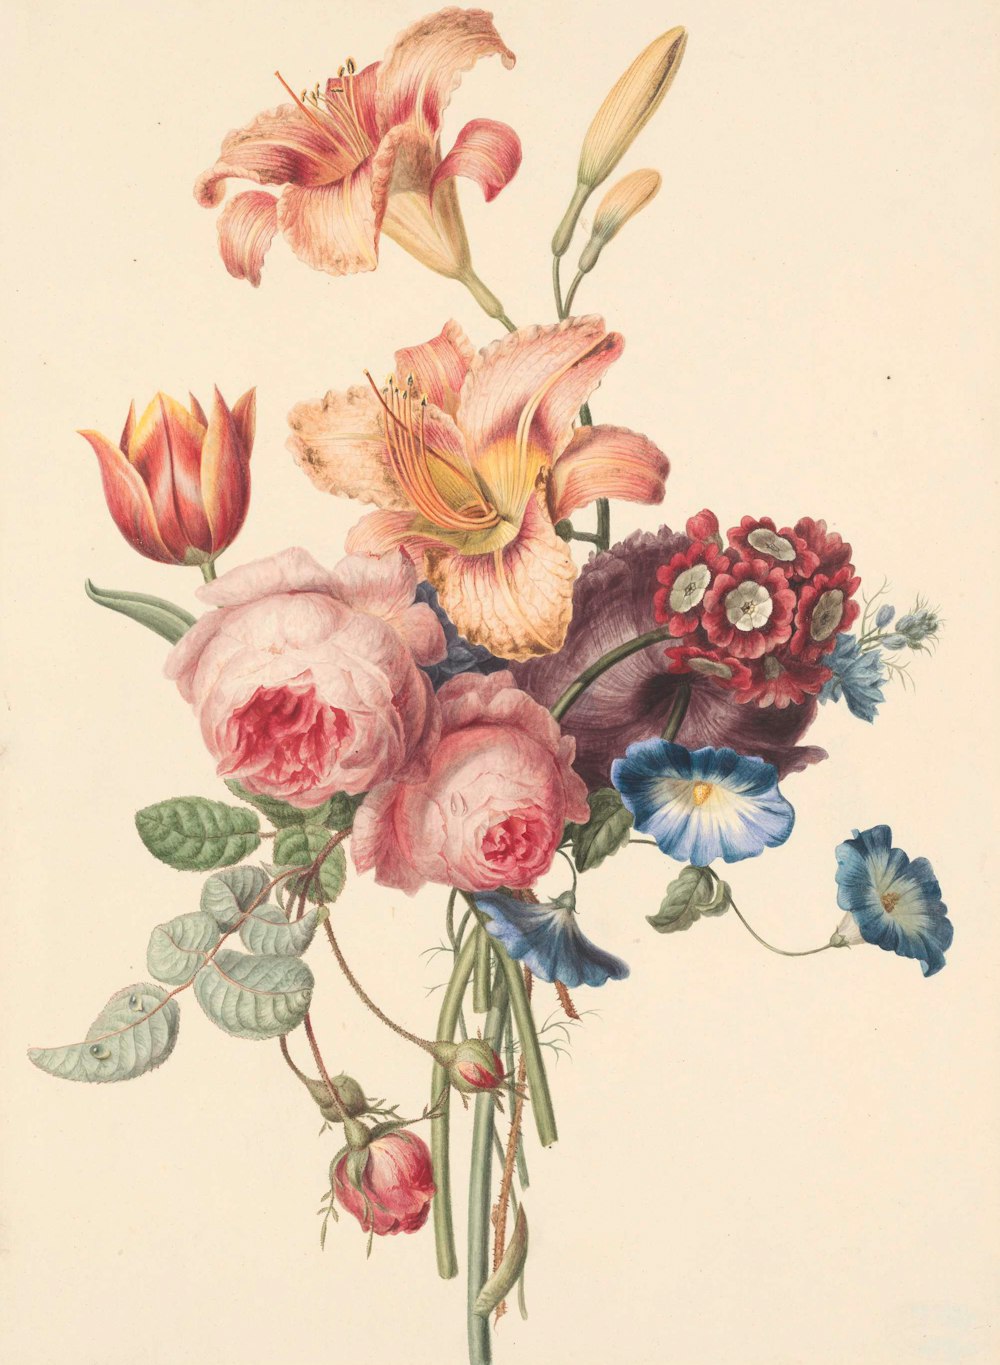 550+ Vintage Flowers Pictures | Download Free Images on Unsplash